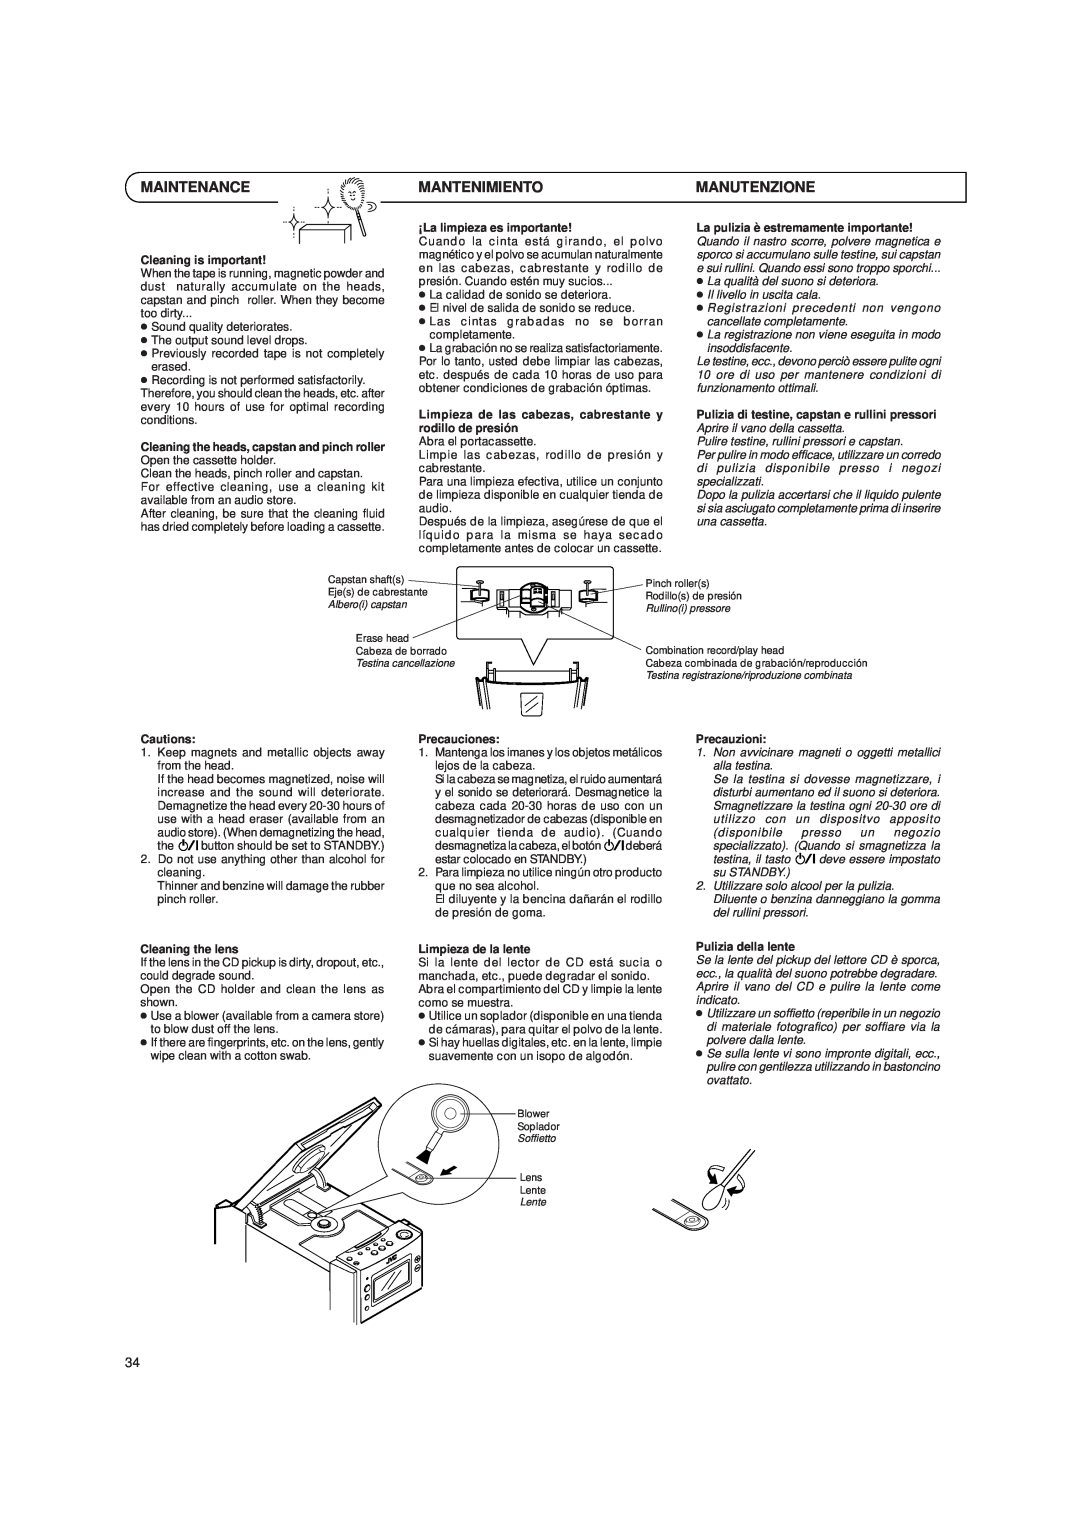 JVC UX-T151, UX-T150 manual Maintenance, Mantenimiento, Manutenzione 